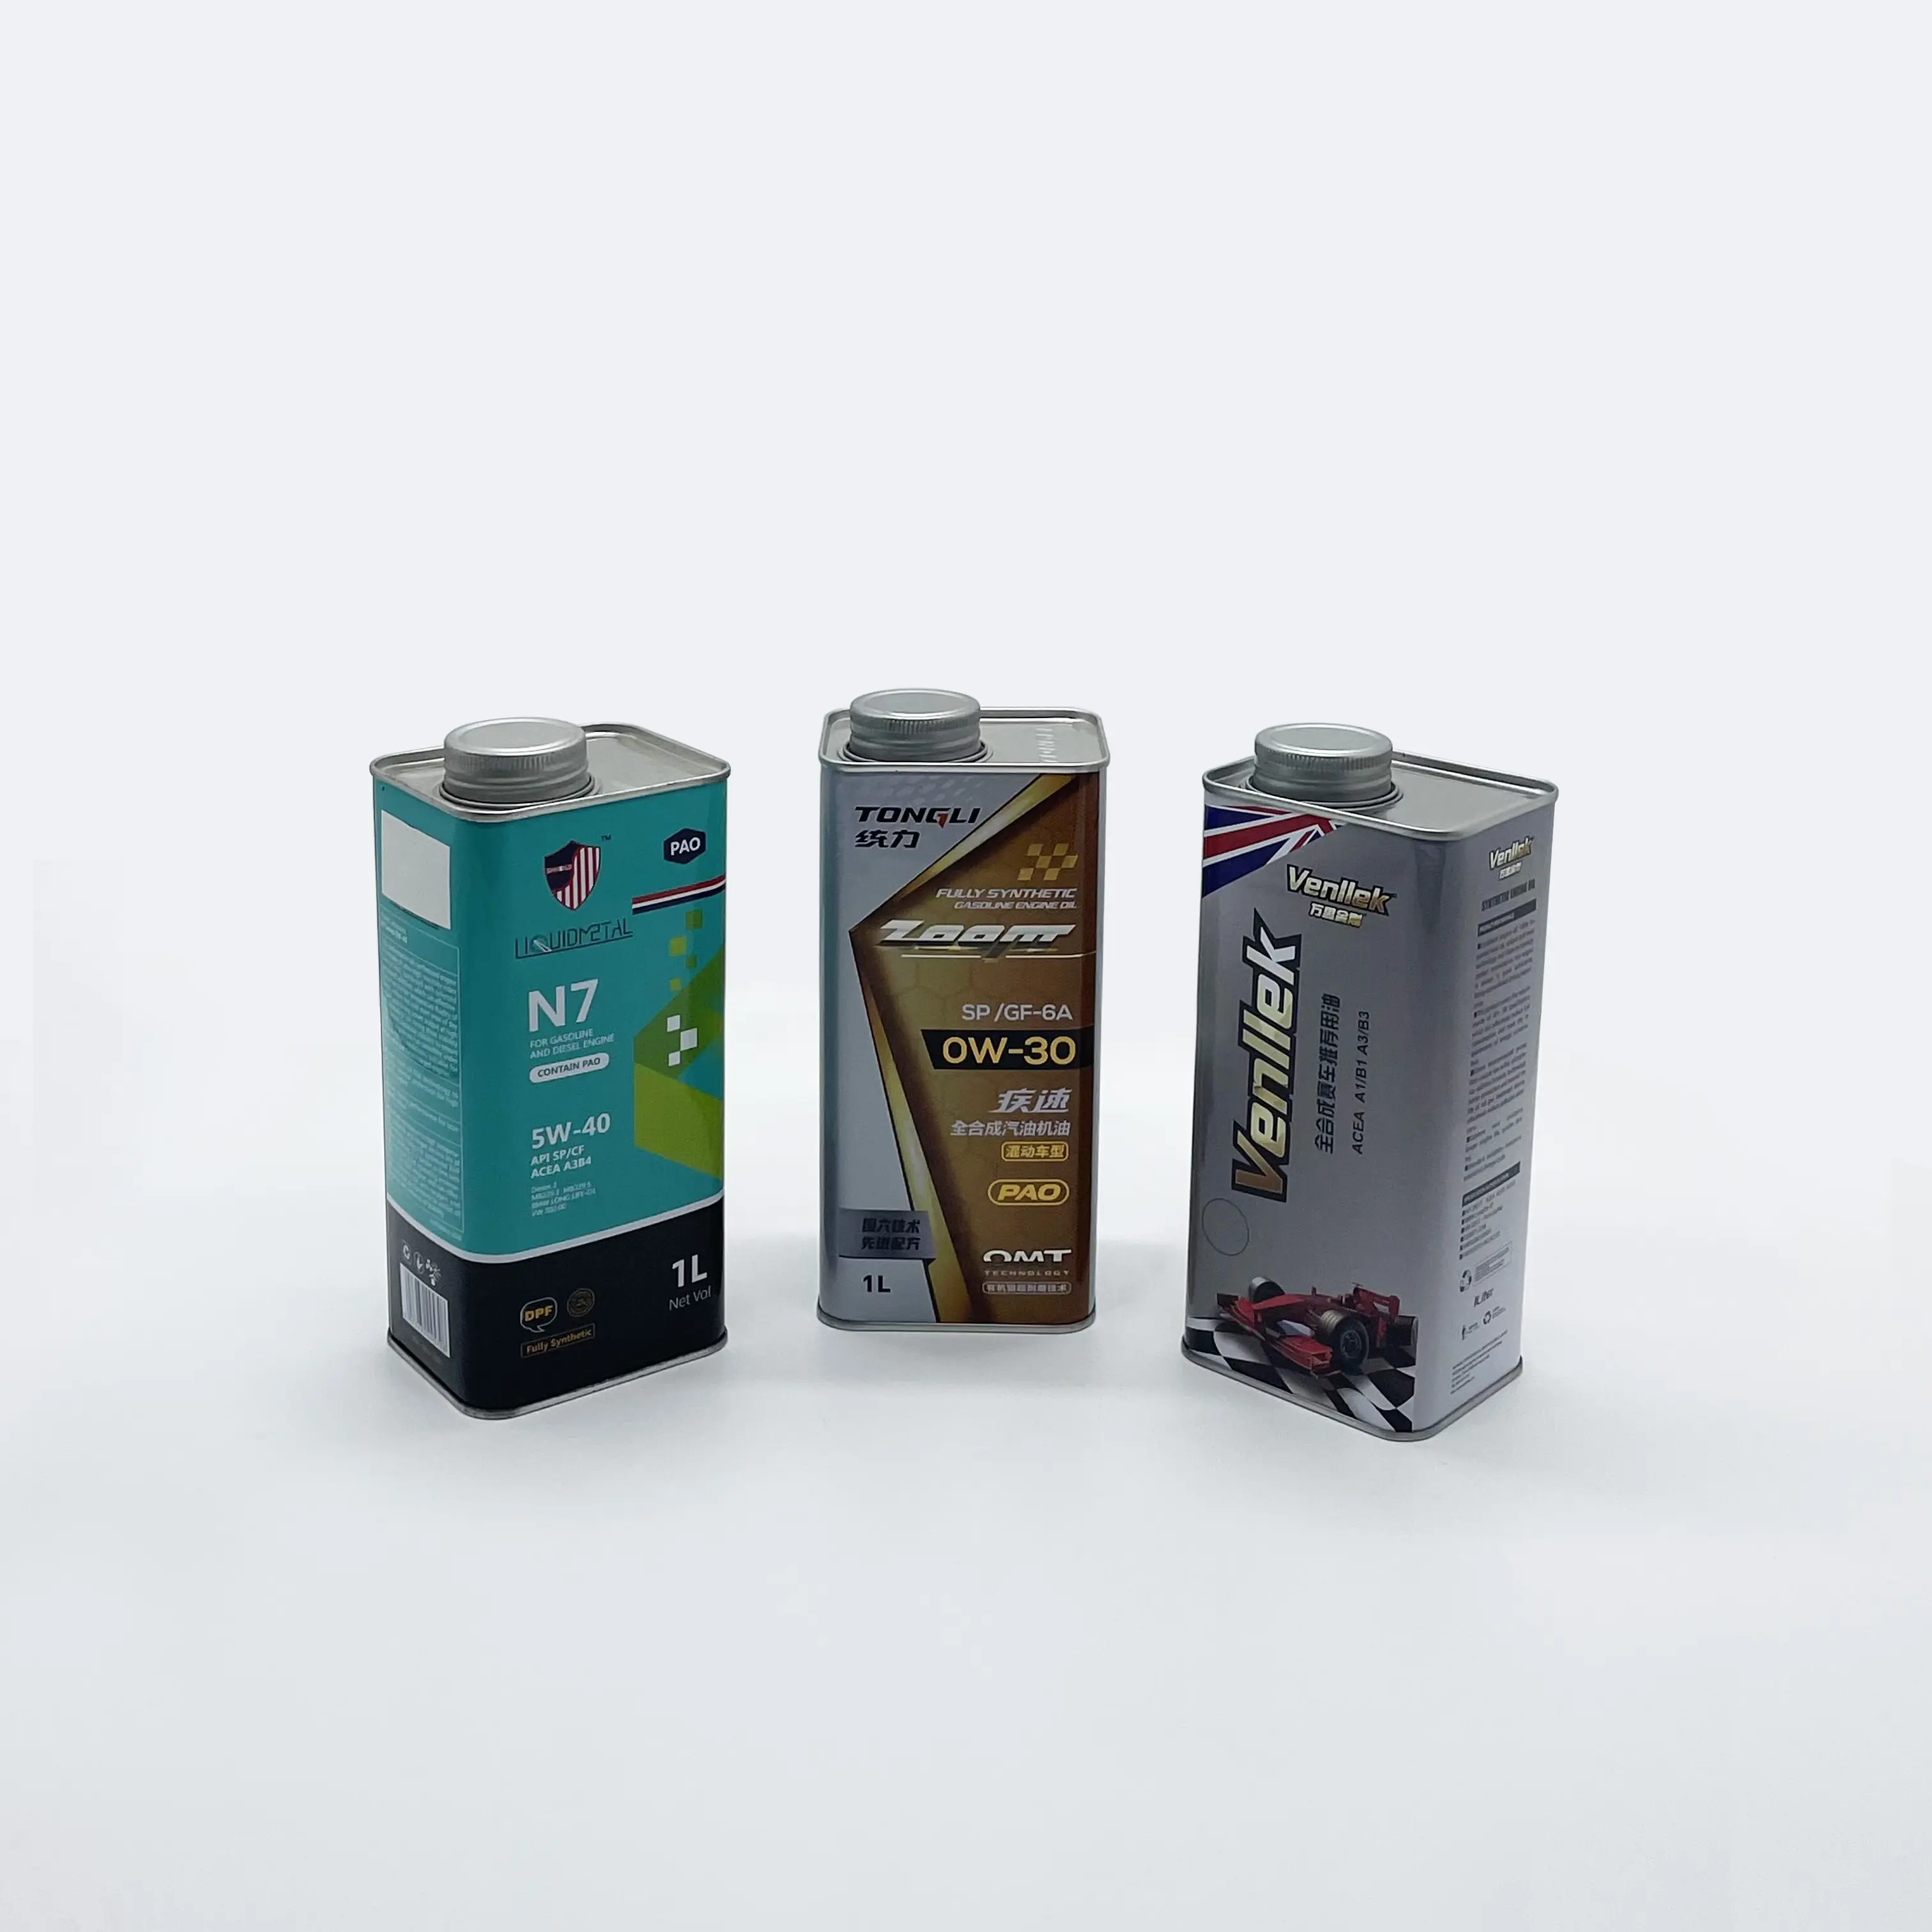 Holesale-contenedores de metal de forma rectangular personalizados, latas de lata de aceite de coche de 1L